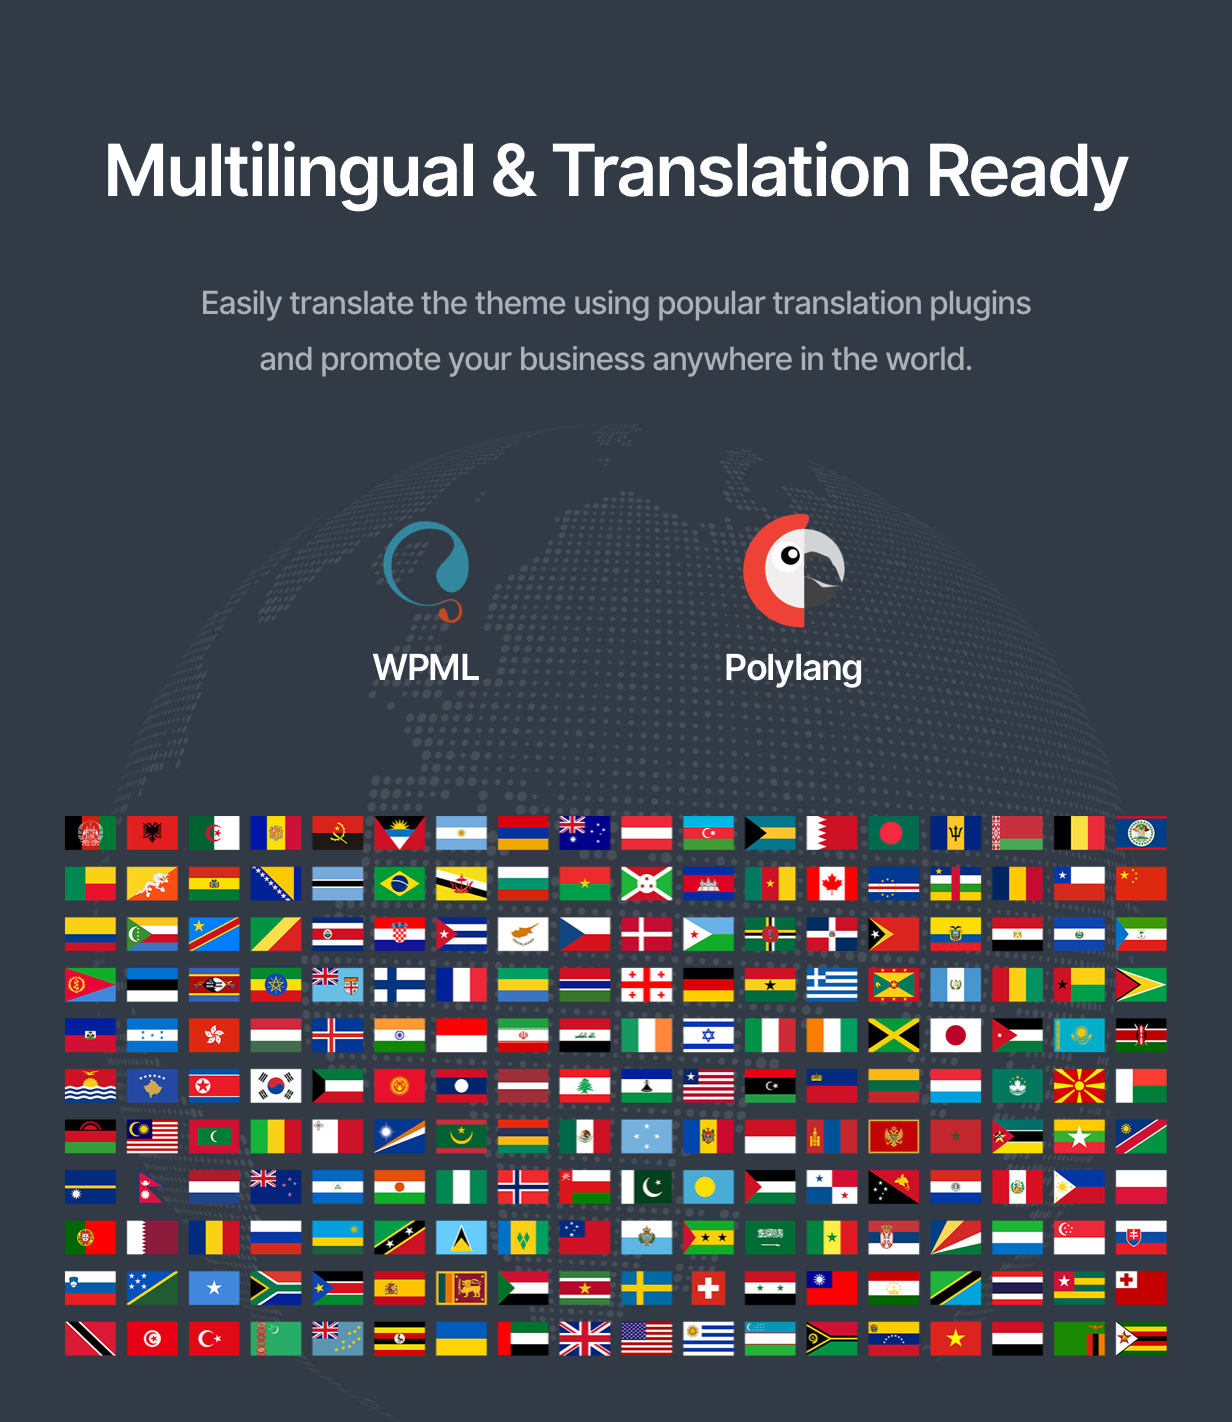 Multilingual & Translation Ready